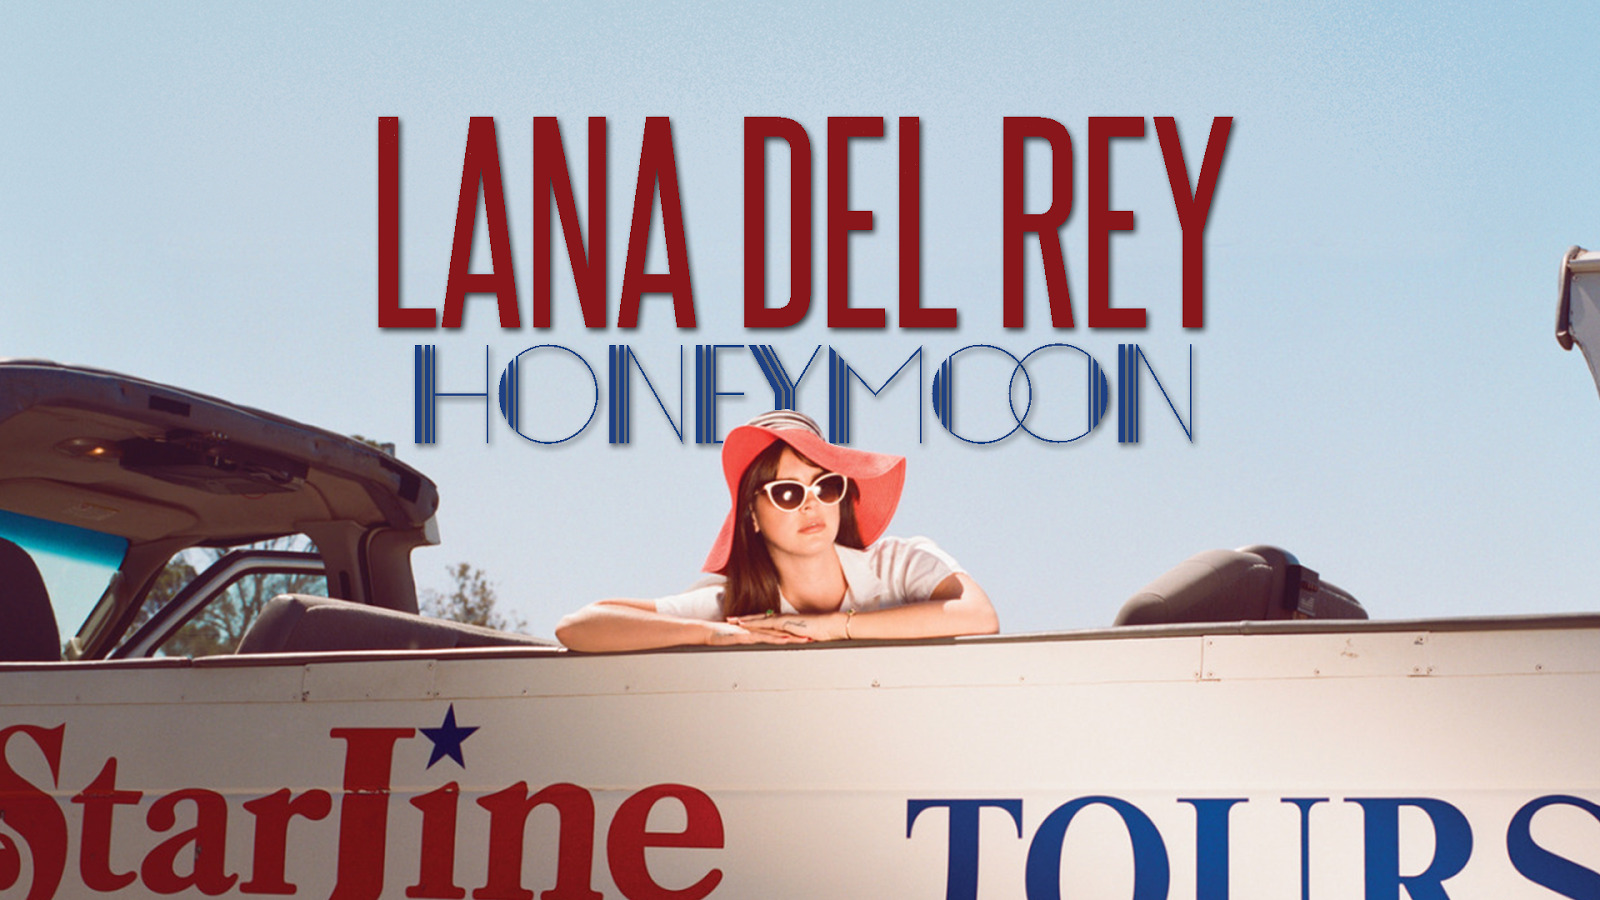 Nostalgic News: Lana Del Rey's Honeymoon was released 5 years ago